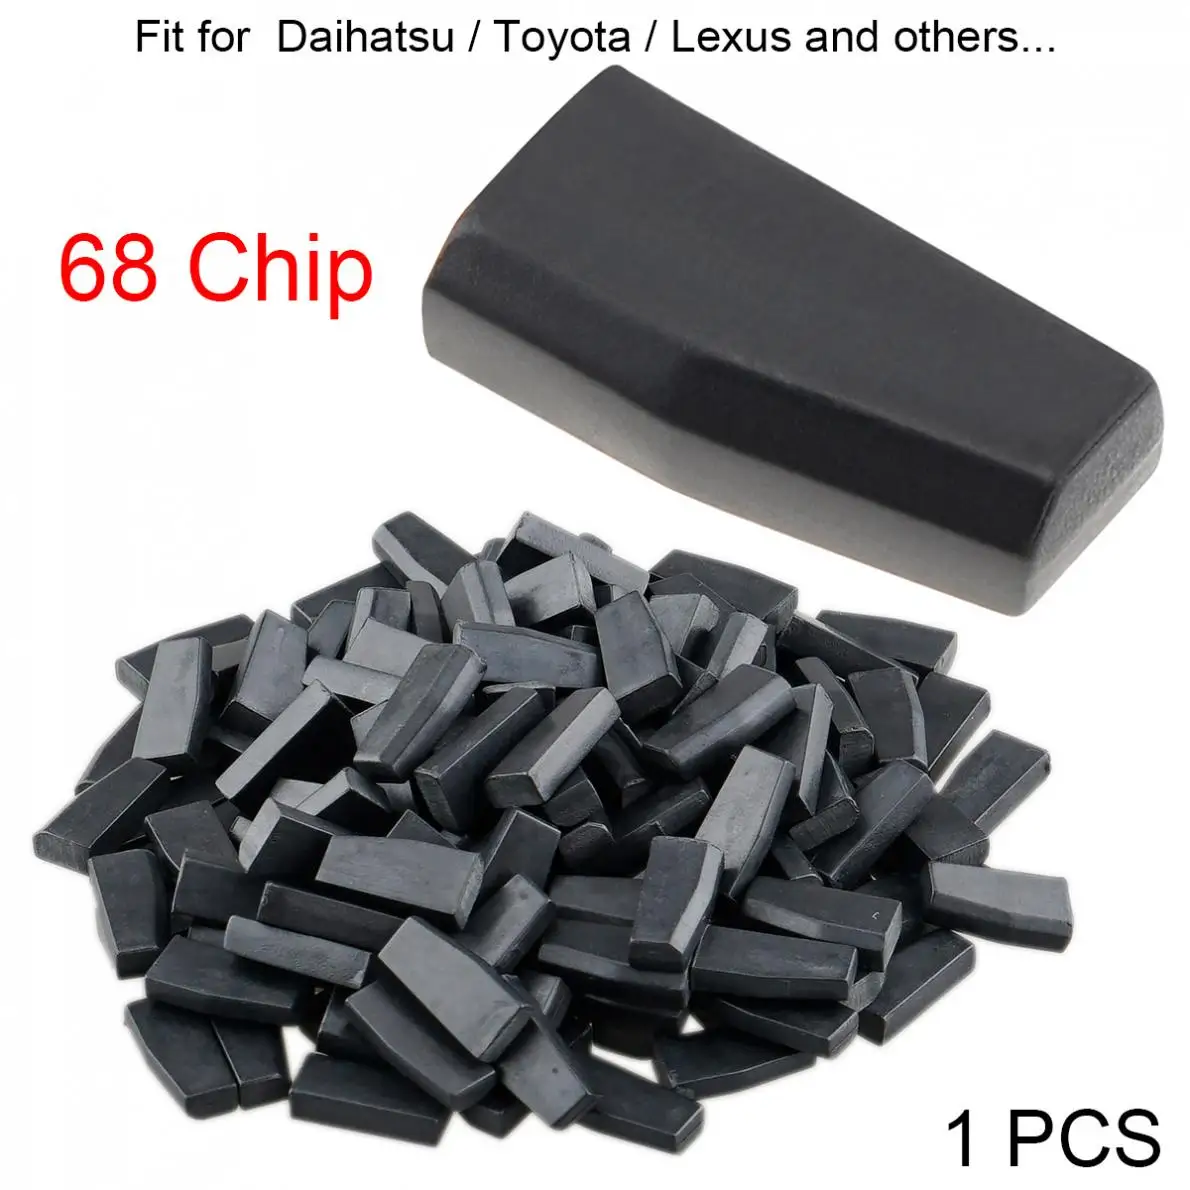 Universal Blank 4D68 ID68 40Bits Carbon Chip Car Key Transponder Chip Fit for Daihatsu Toyota Lexus